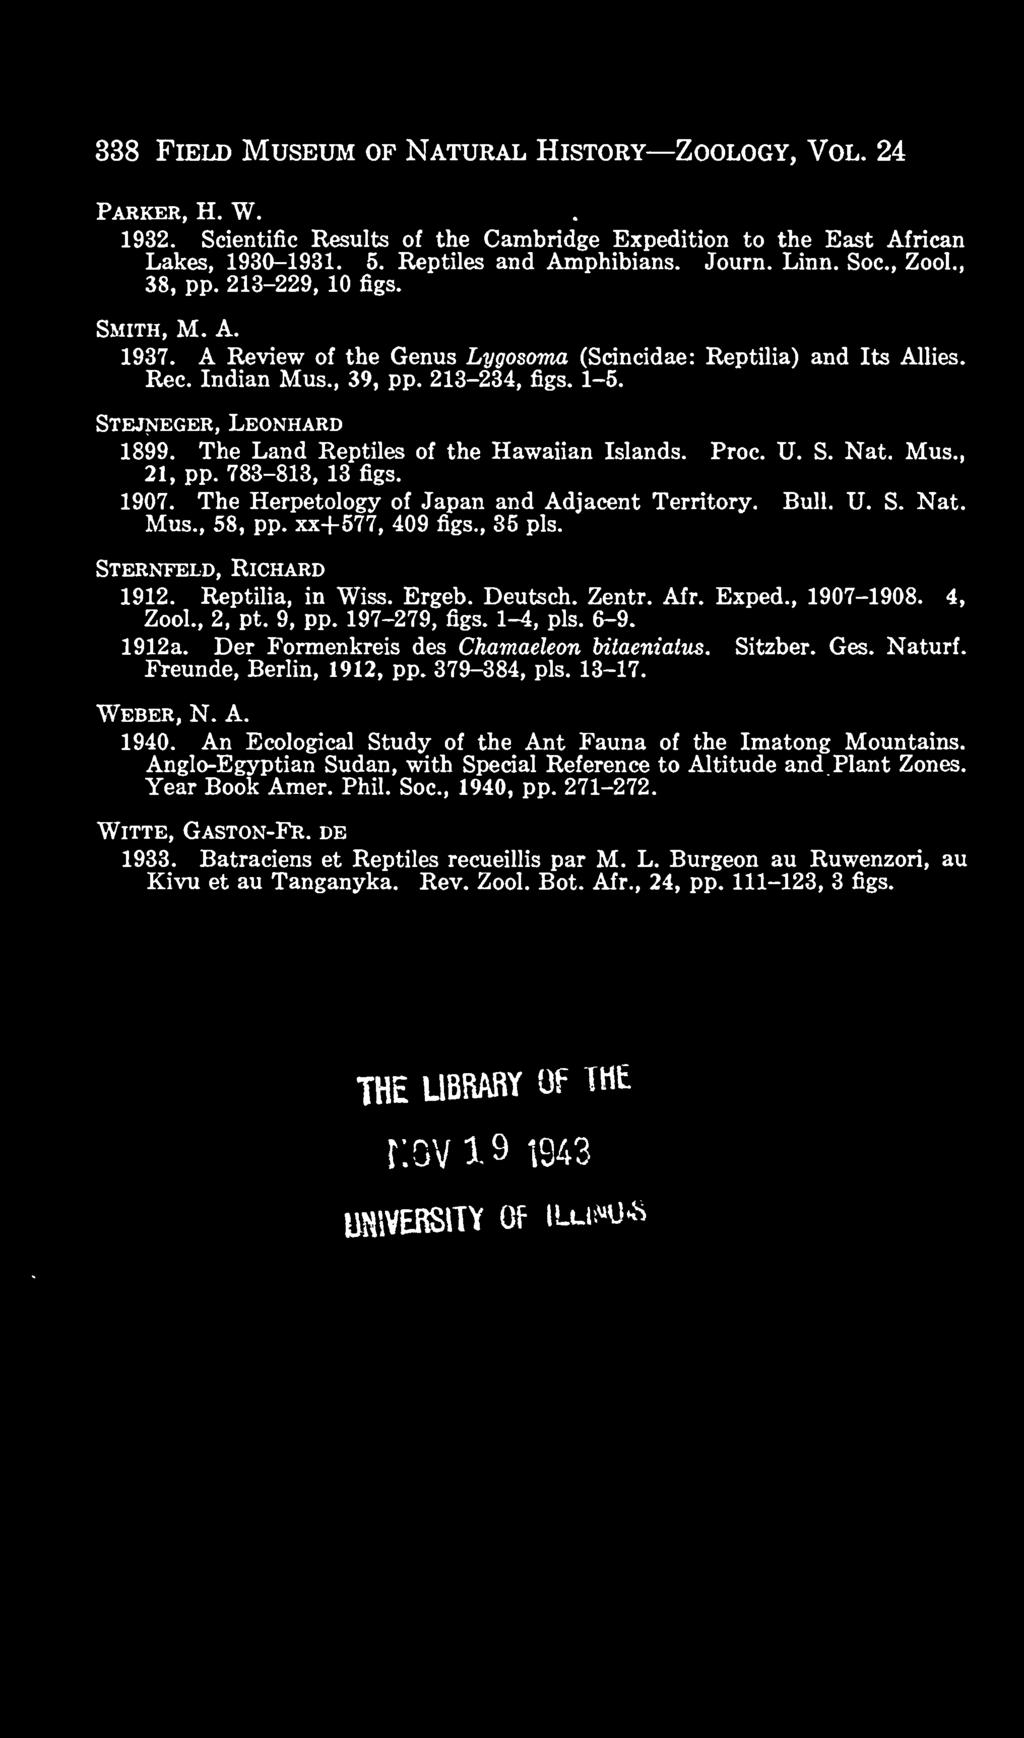 Der Formenkreis des Chamaeleon bitaeniatus. Sitzber. Ges. Naturf. Freunde, Berlin, 1912, pp. 379-384, pis. 13-17. WEBER, N. A. 1940. An Ecological Study of the Ant Fauna of the Imatong Mountains.